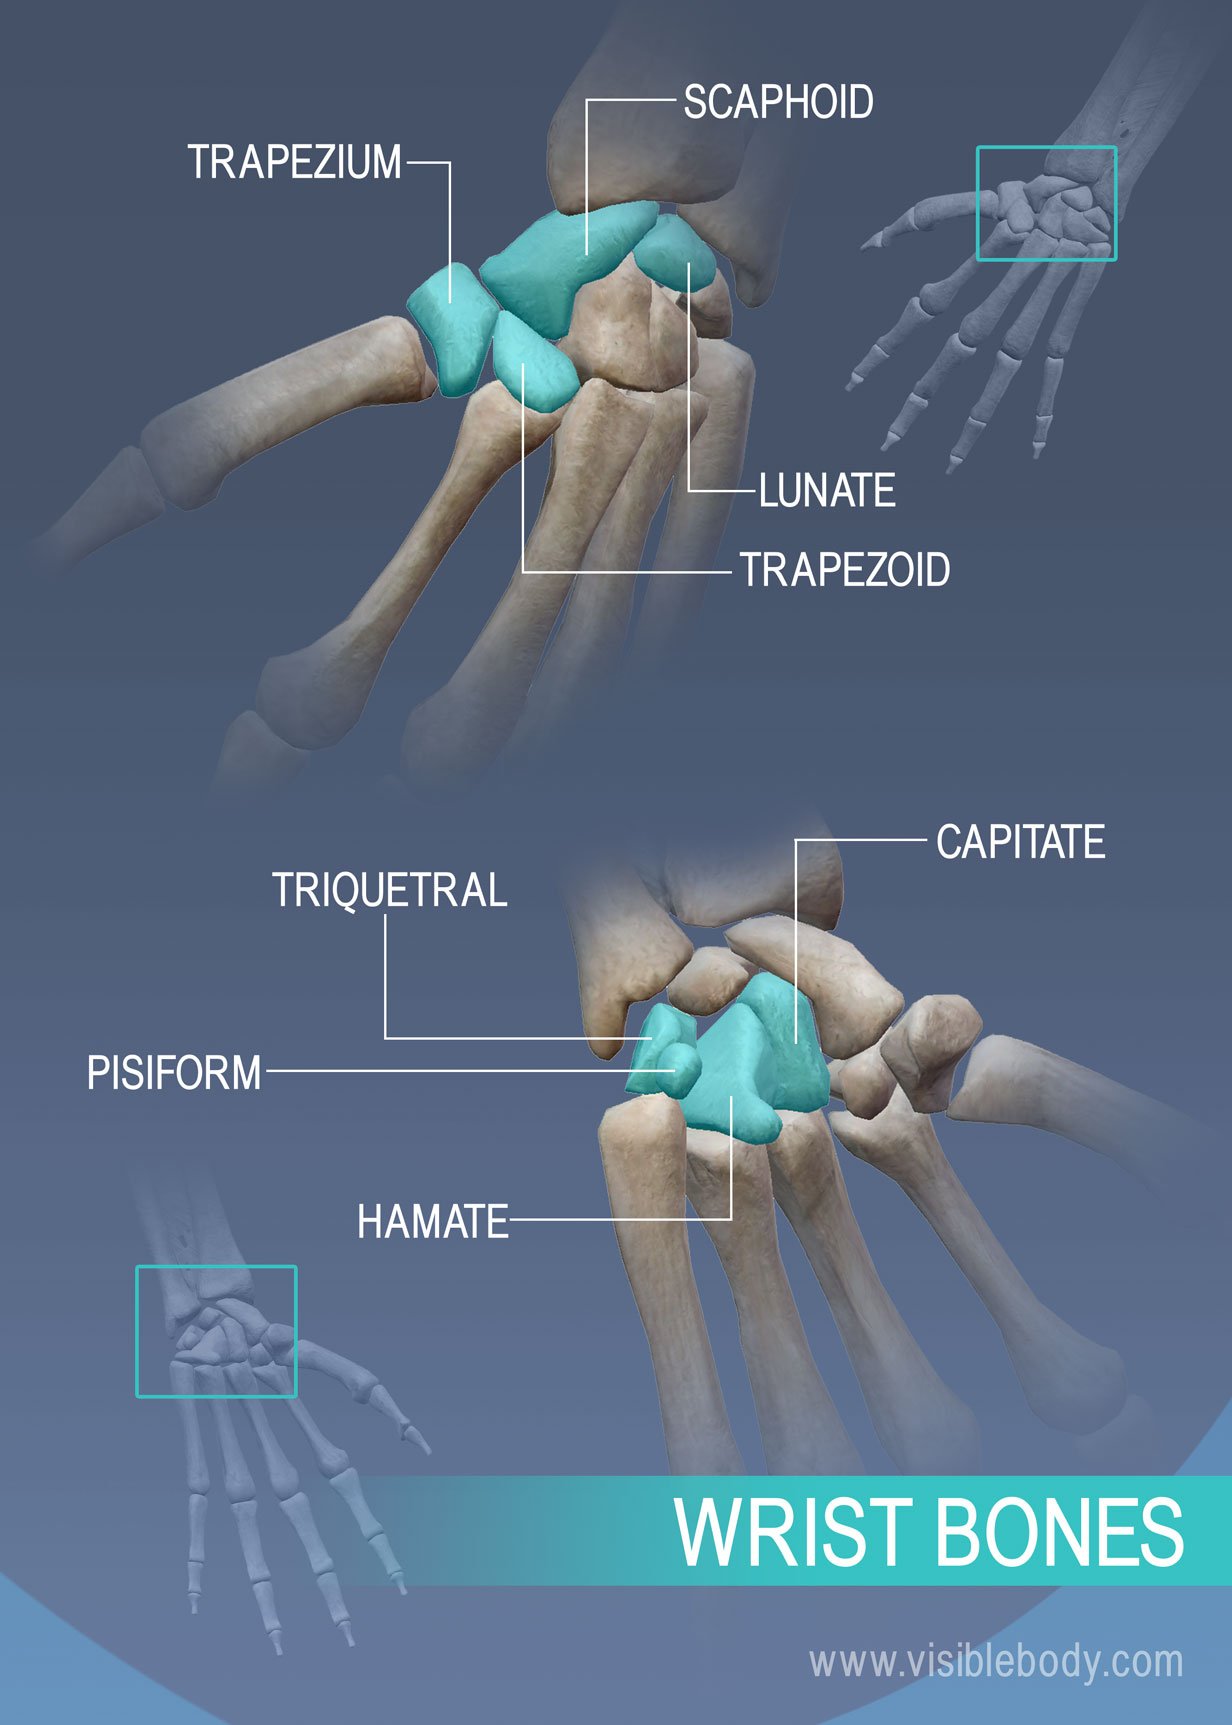 Appendicular Skeleton. Pectoral Girdle. Shoulder Girdle. Upper Limb